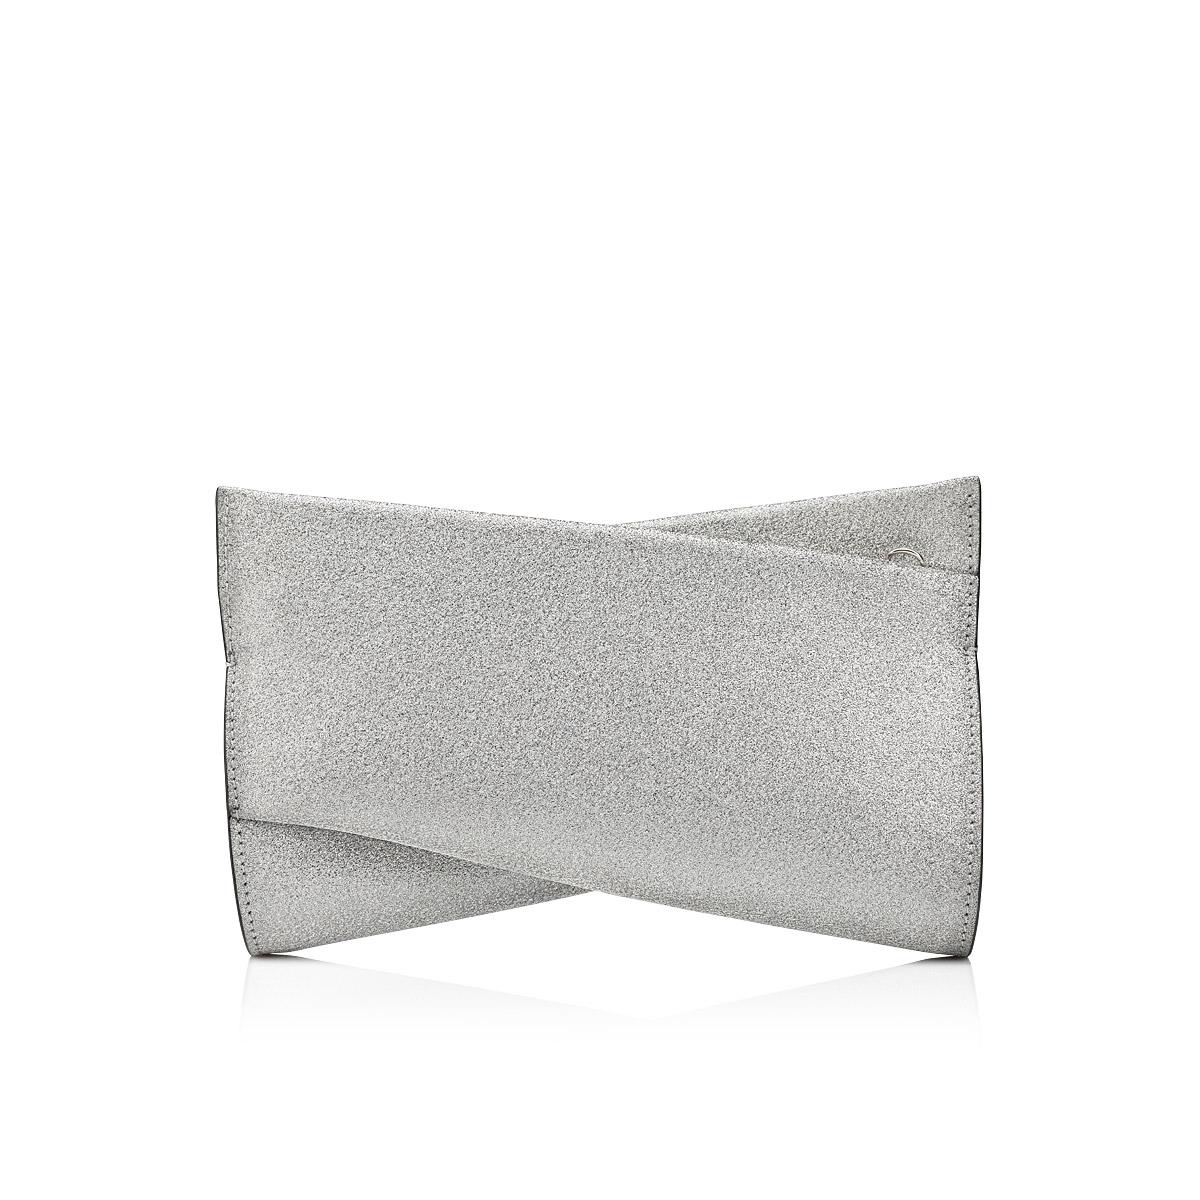 Christian Louboutin Loubila Metallic Leather Pouch Clutch Bag Silver